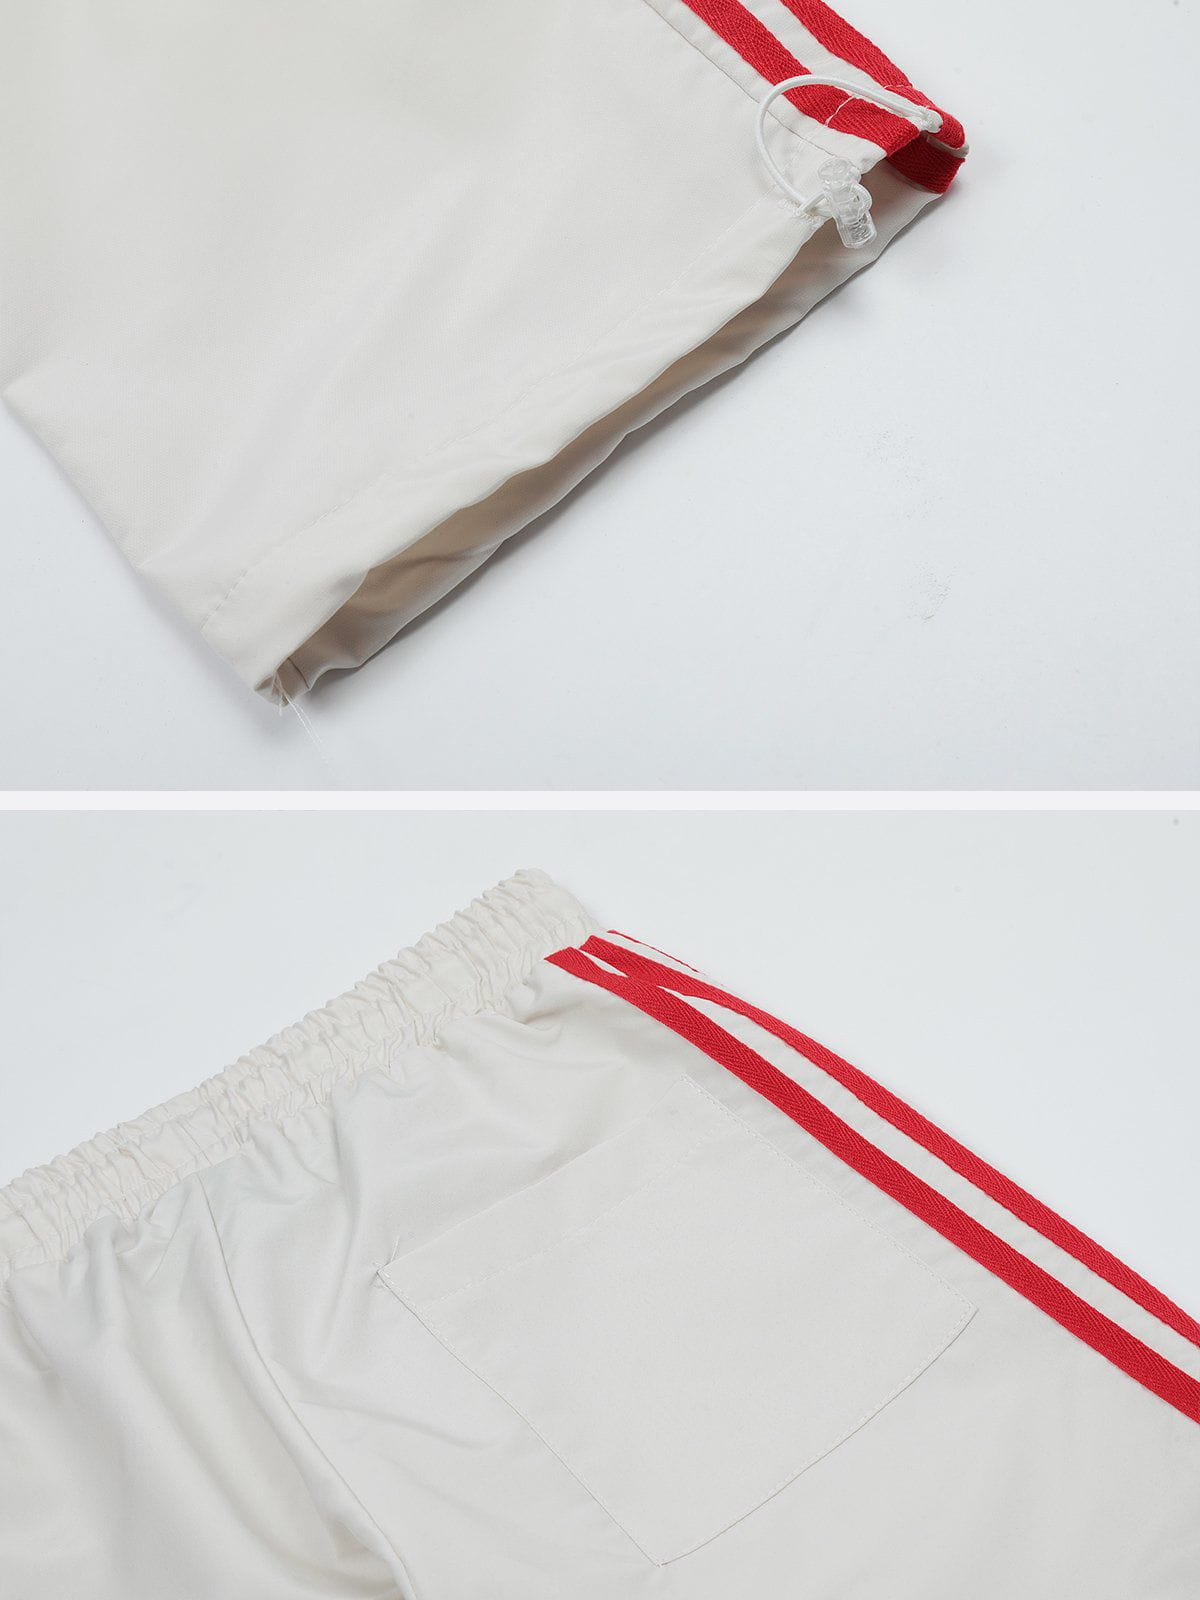 Sneakerland® - Stripe Large Pocket Cargo Pants